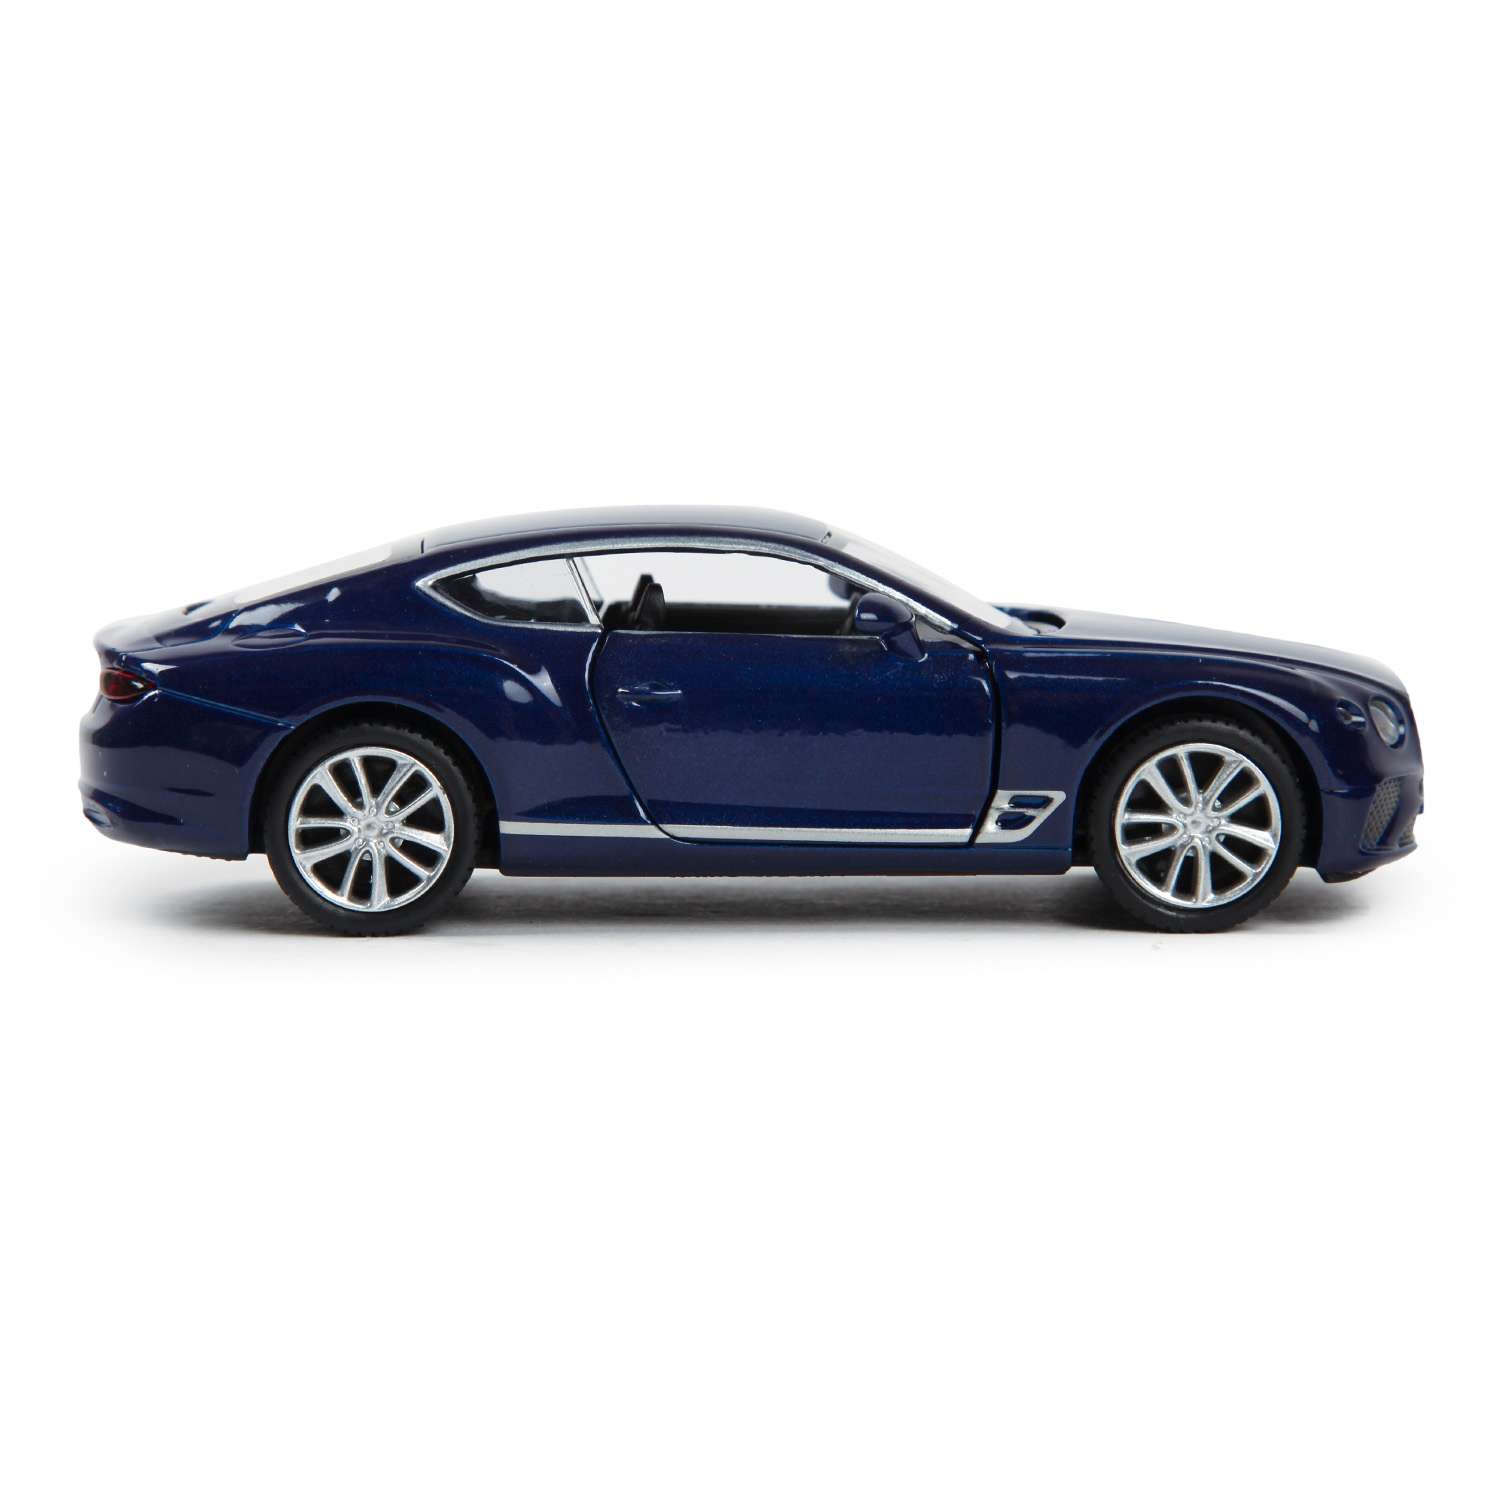 Машинка Mobicaro 1:32 The Bentley Continental GT Синяя 544043 544043 - фото 2